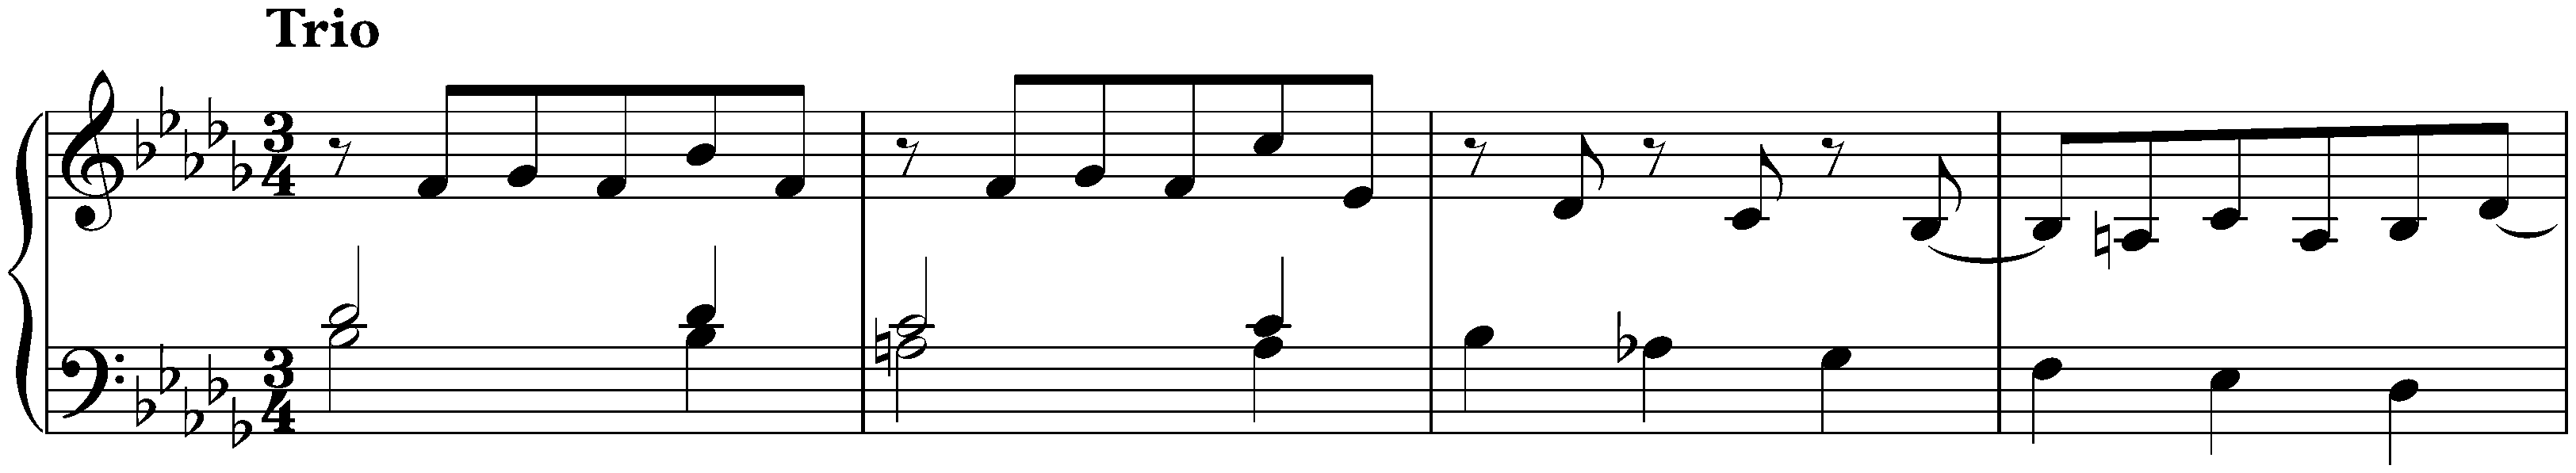 Sonata in B-flat major, Hob. XVI:2; 3. Menuet – Trio